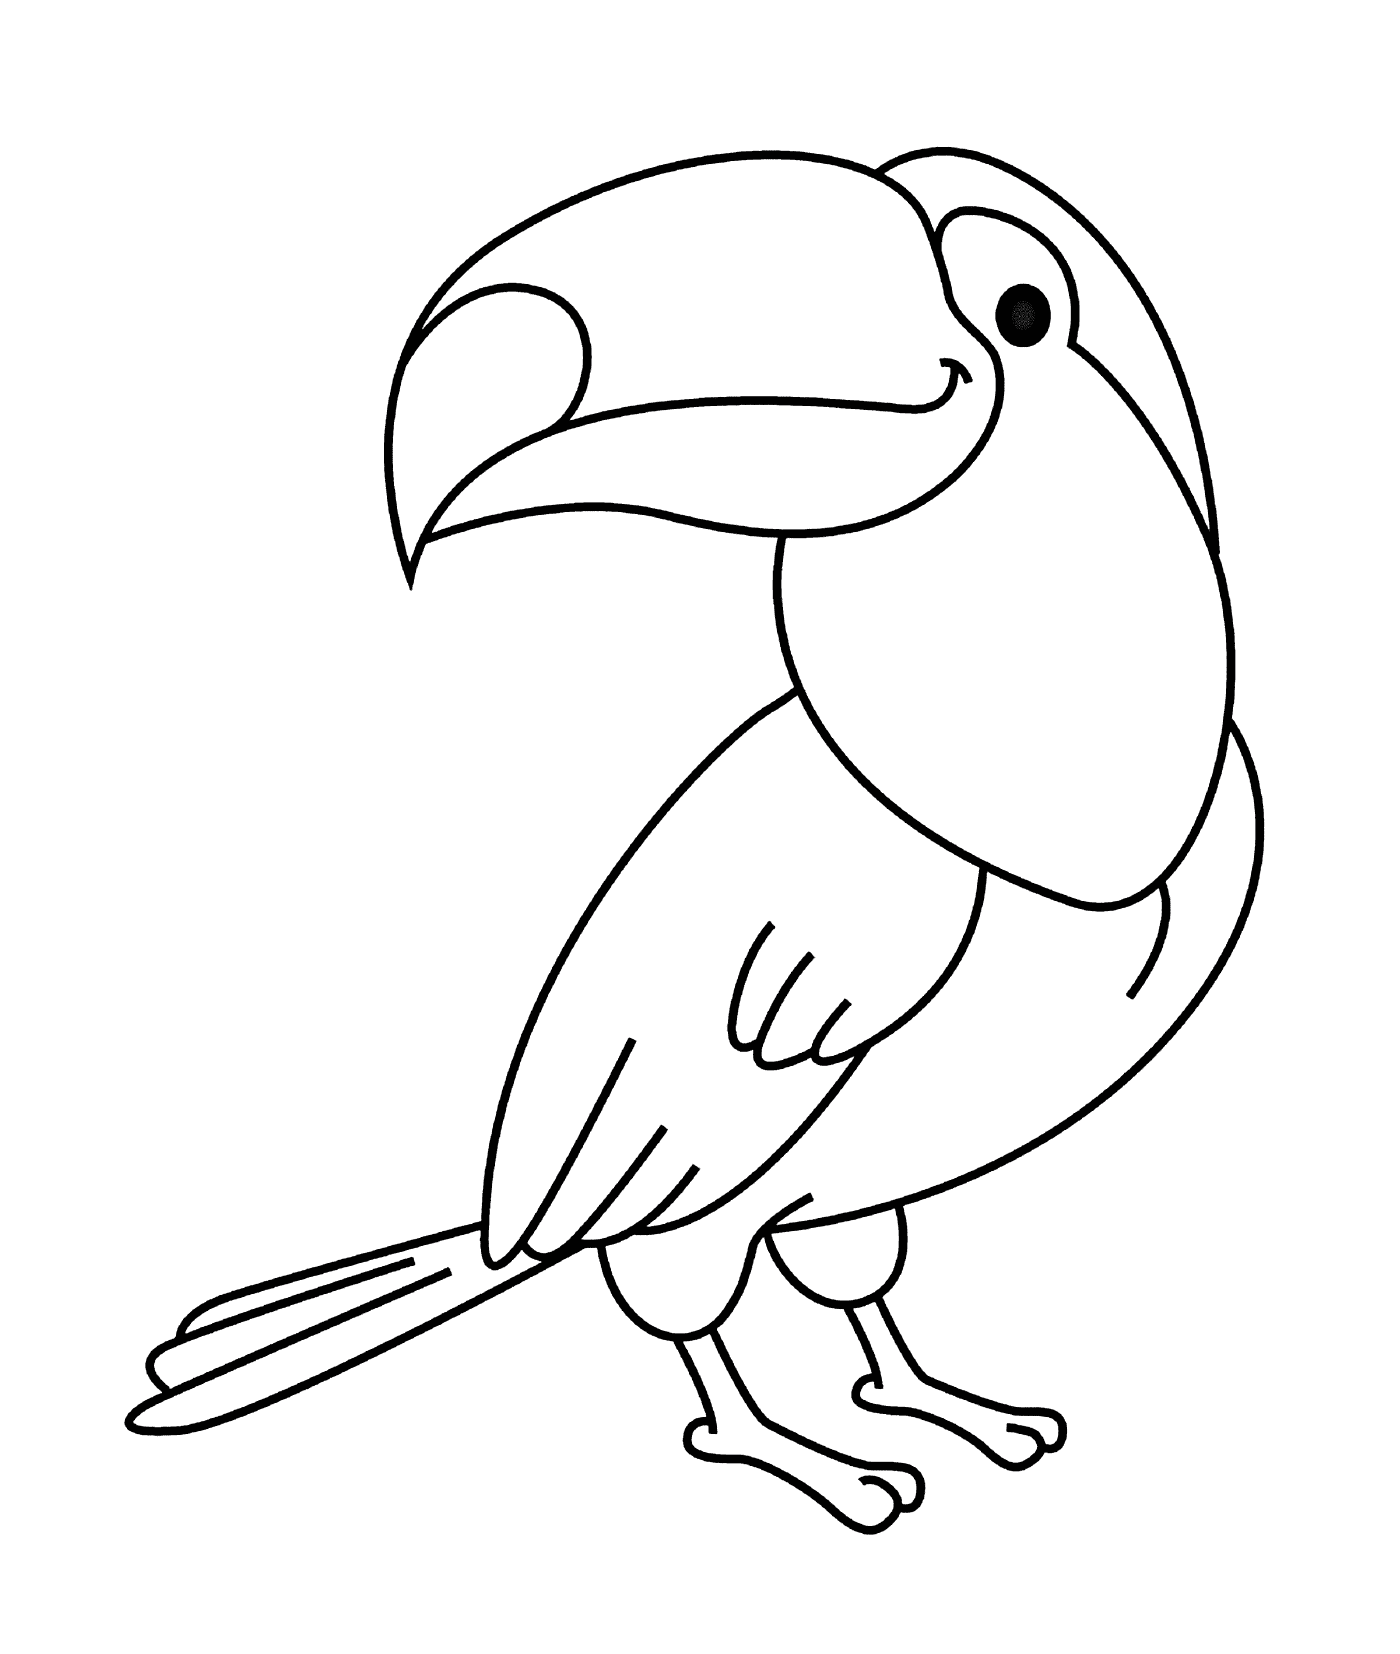 coloriage oiseau toucan